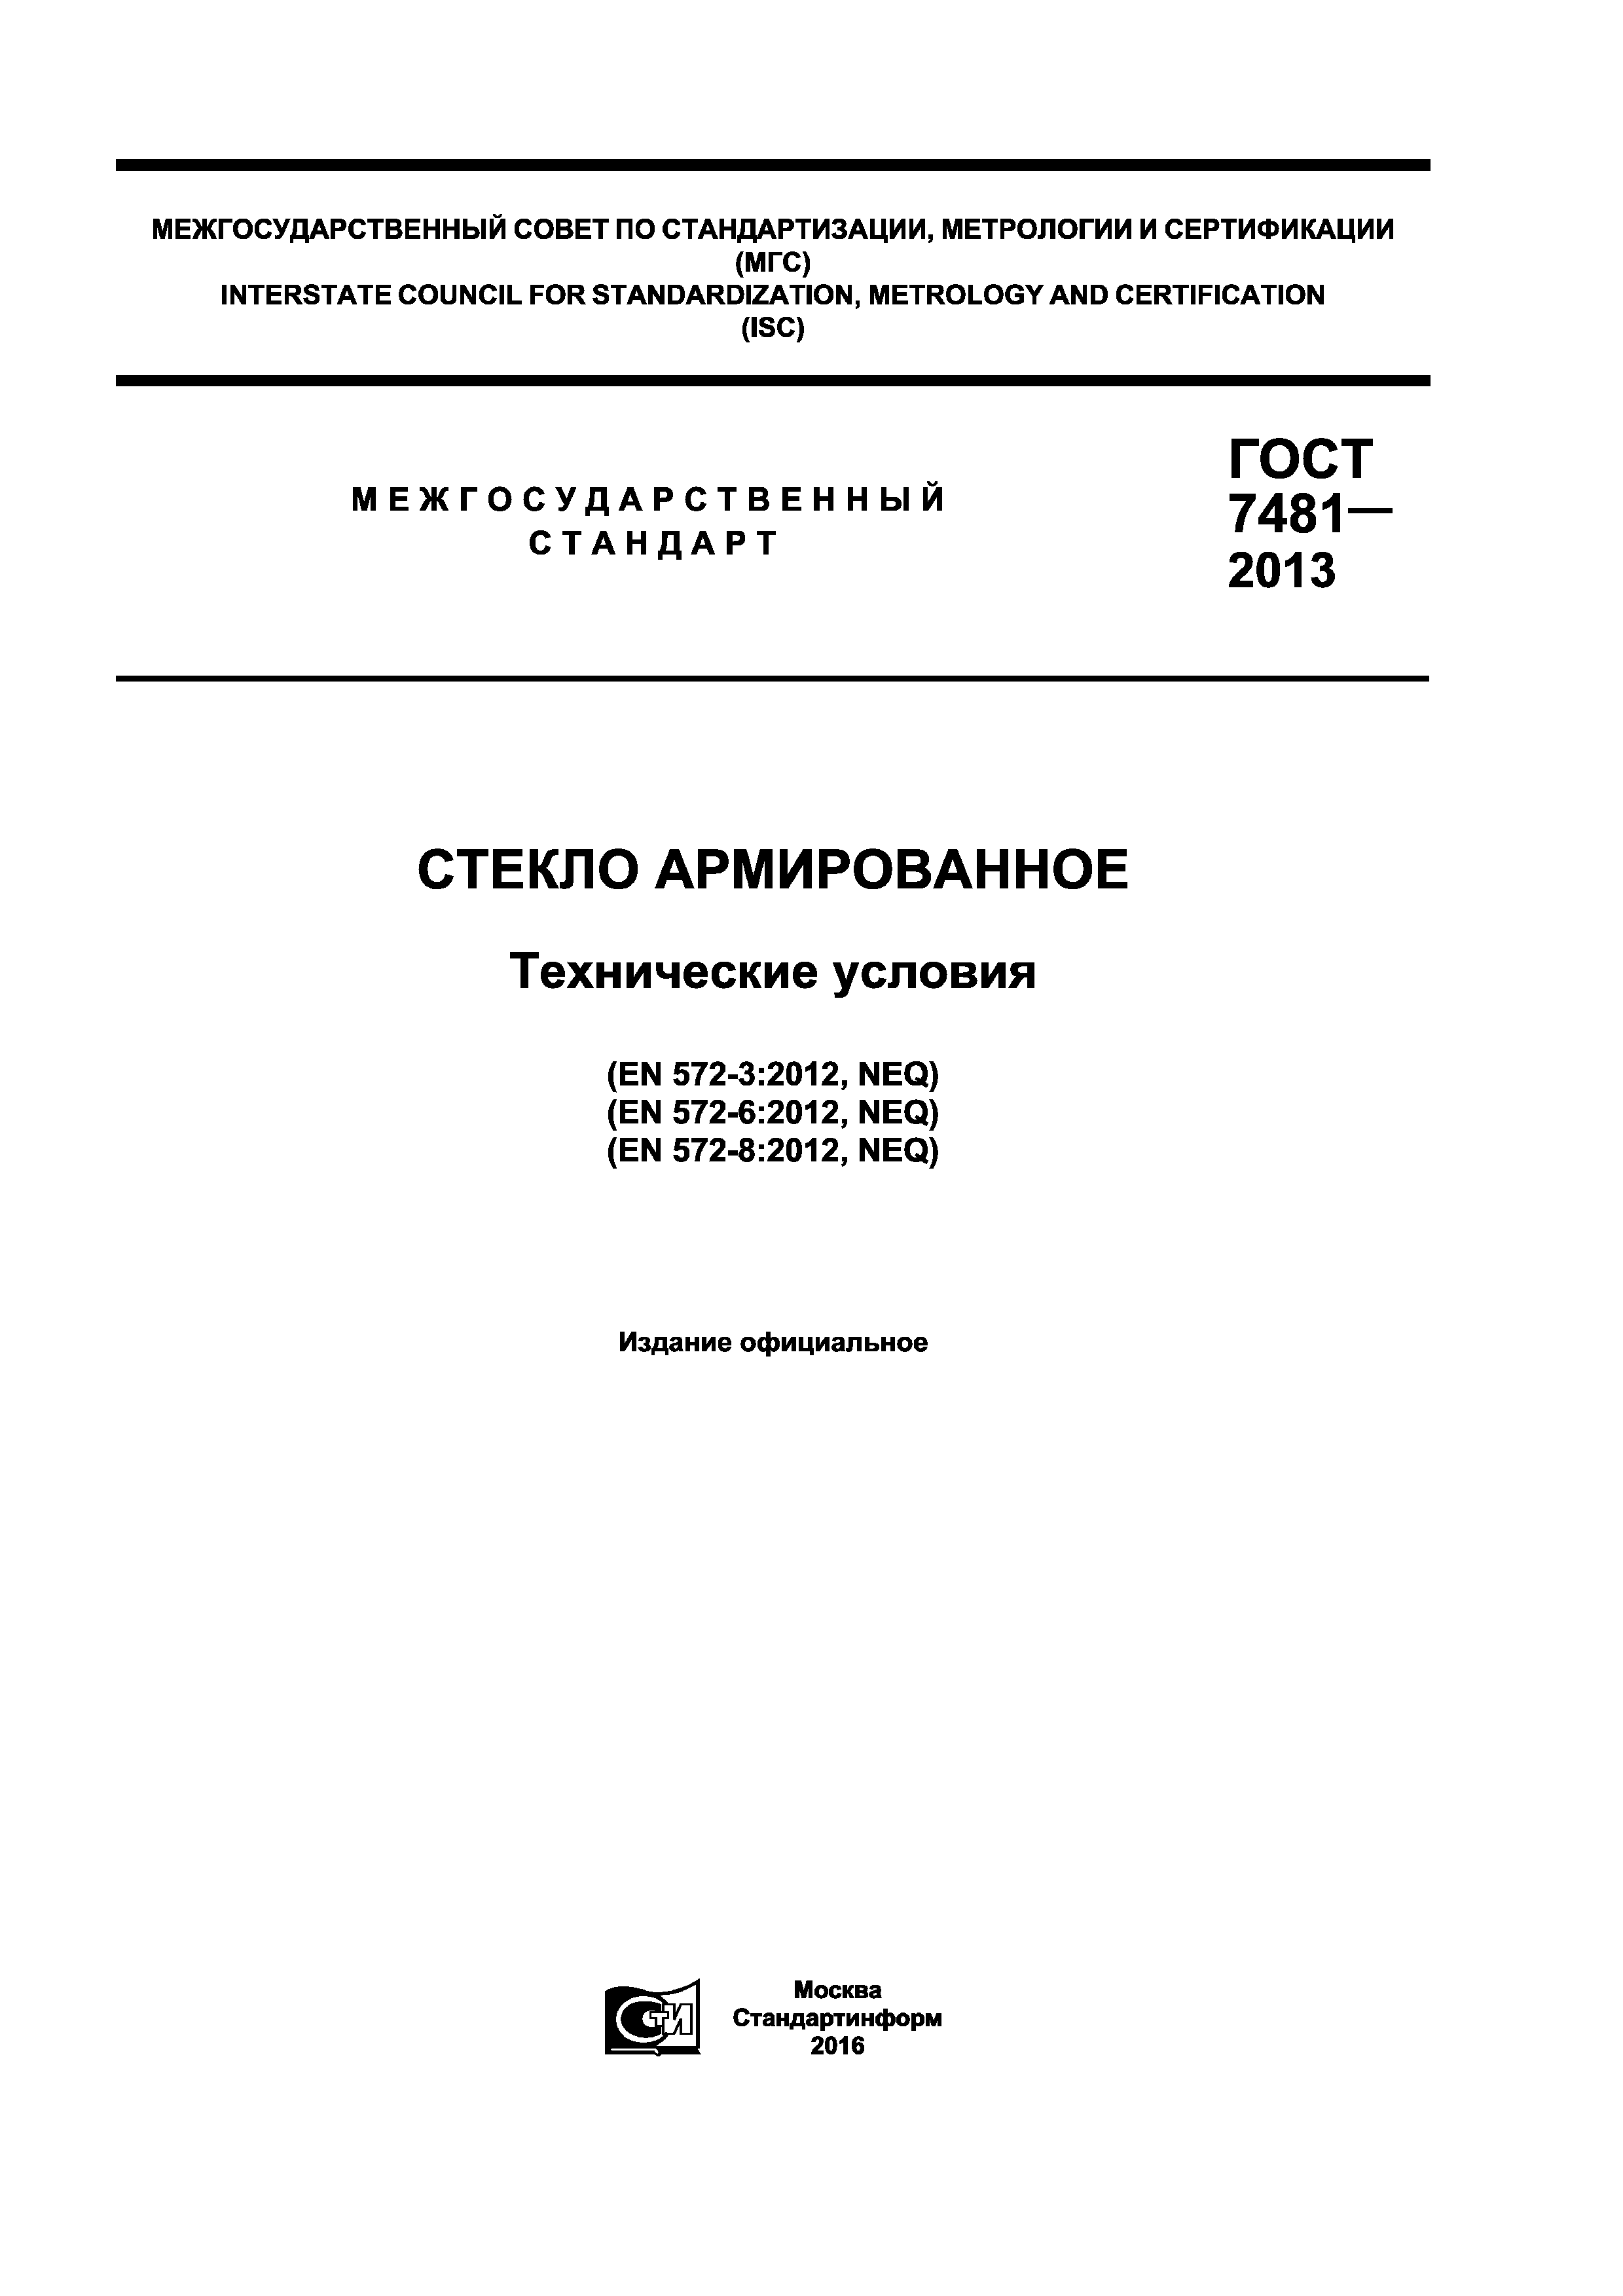 ГОСТ 7481-2013